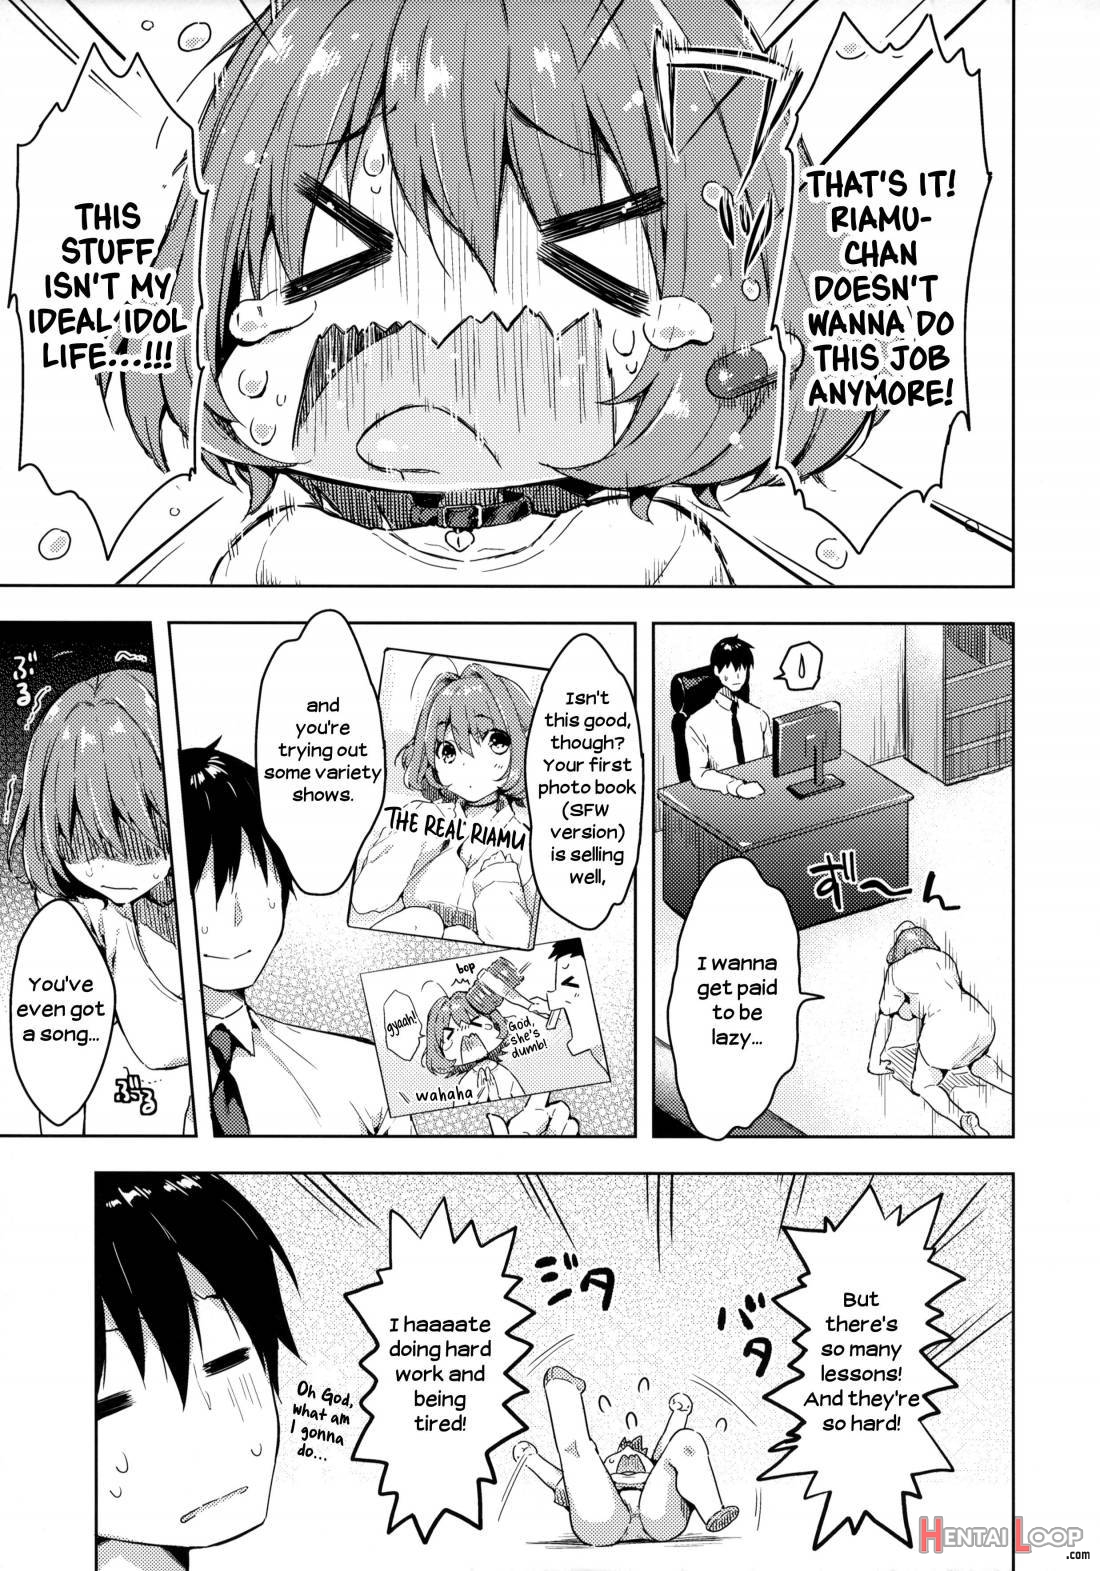 Riamu-chan Onedari Sex page 20